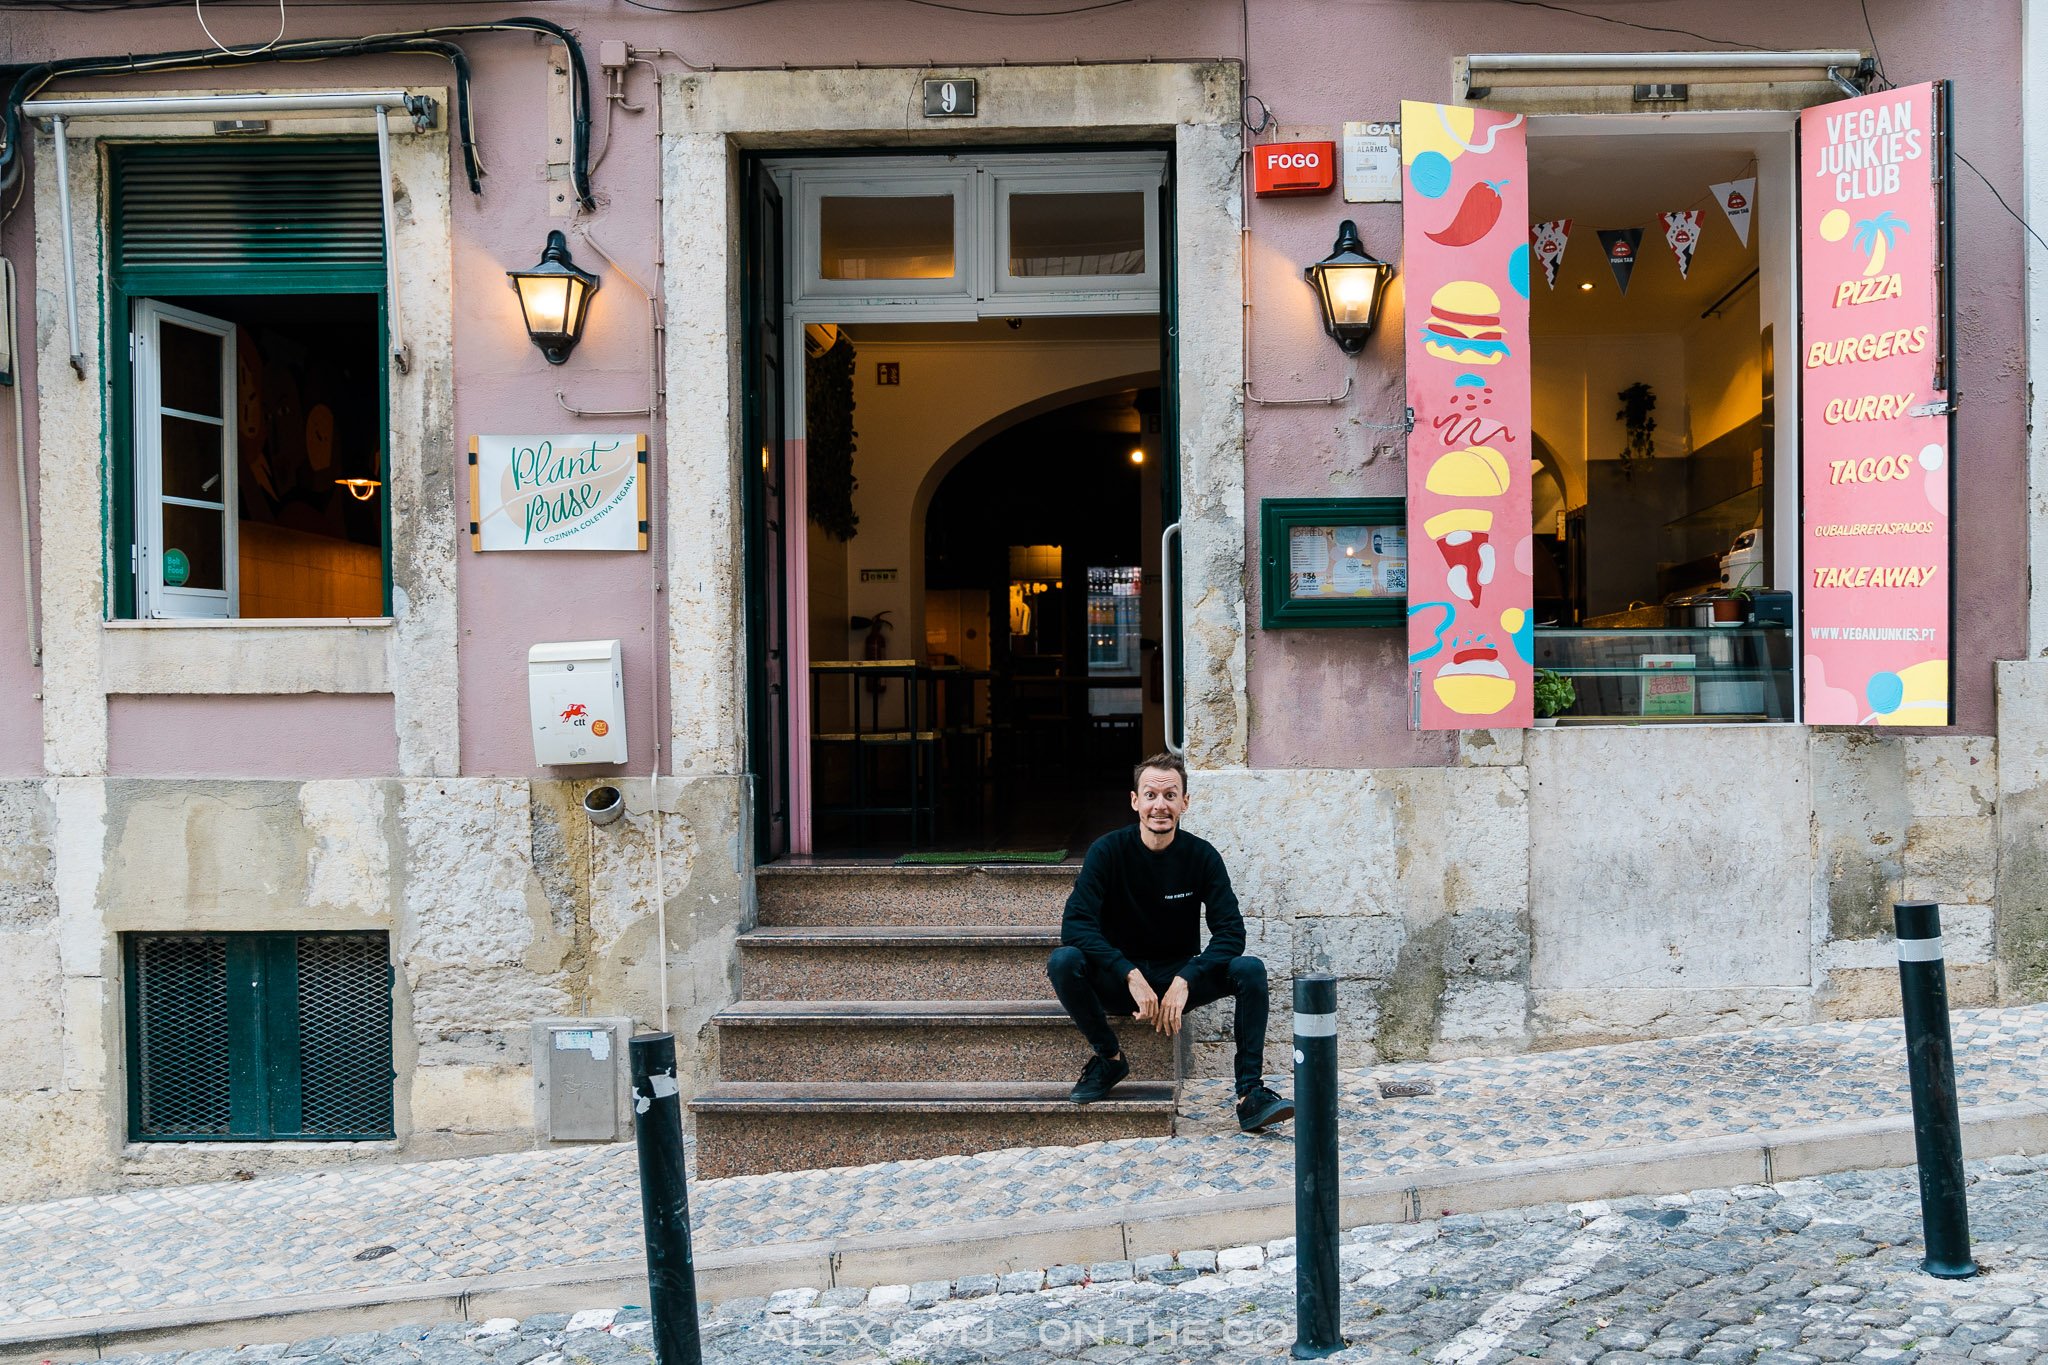 Alex-MJ-On-the-GO-Portugal_itinéraire_Lisbonne restaurant vege.jpg